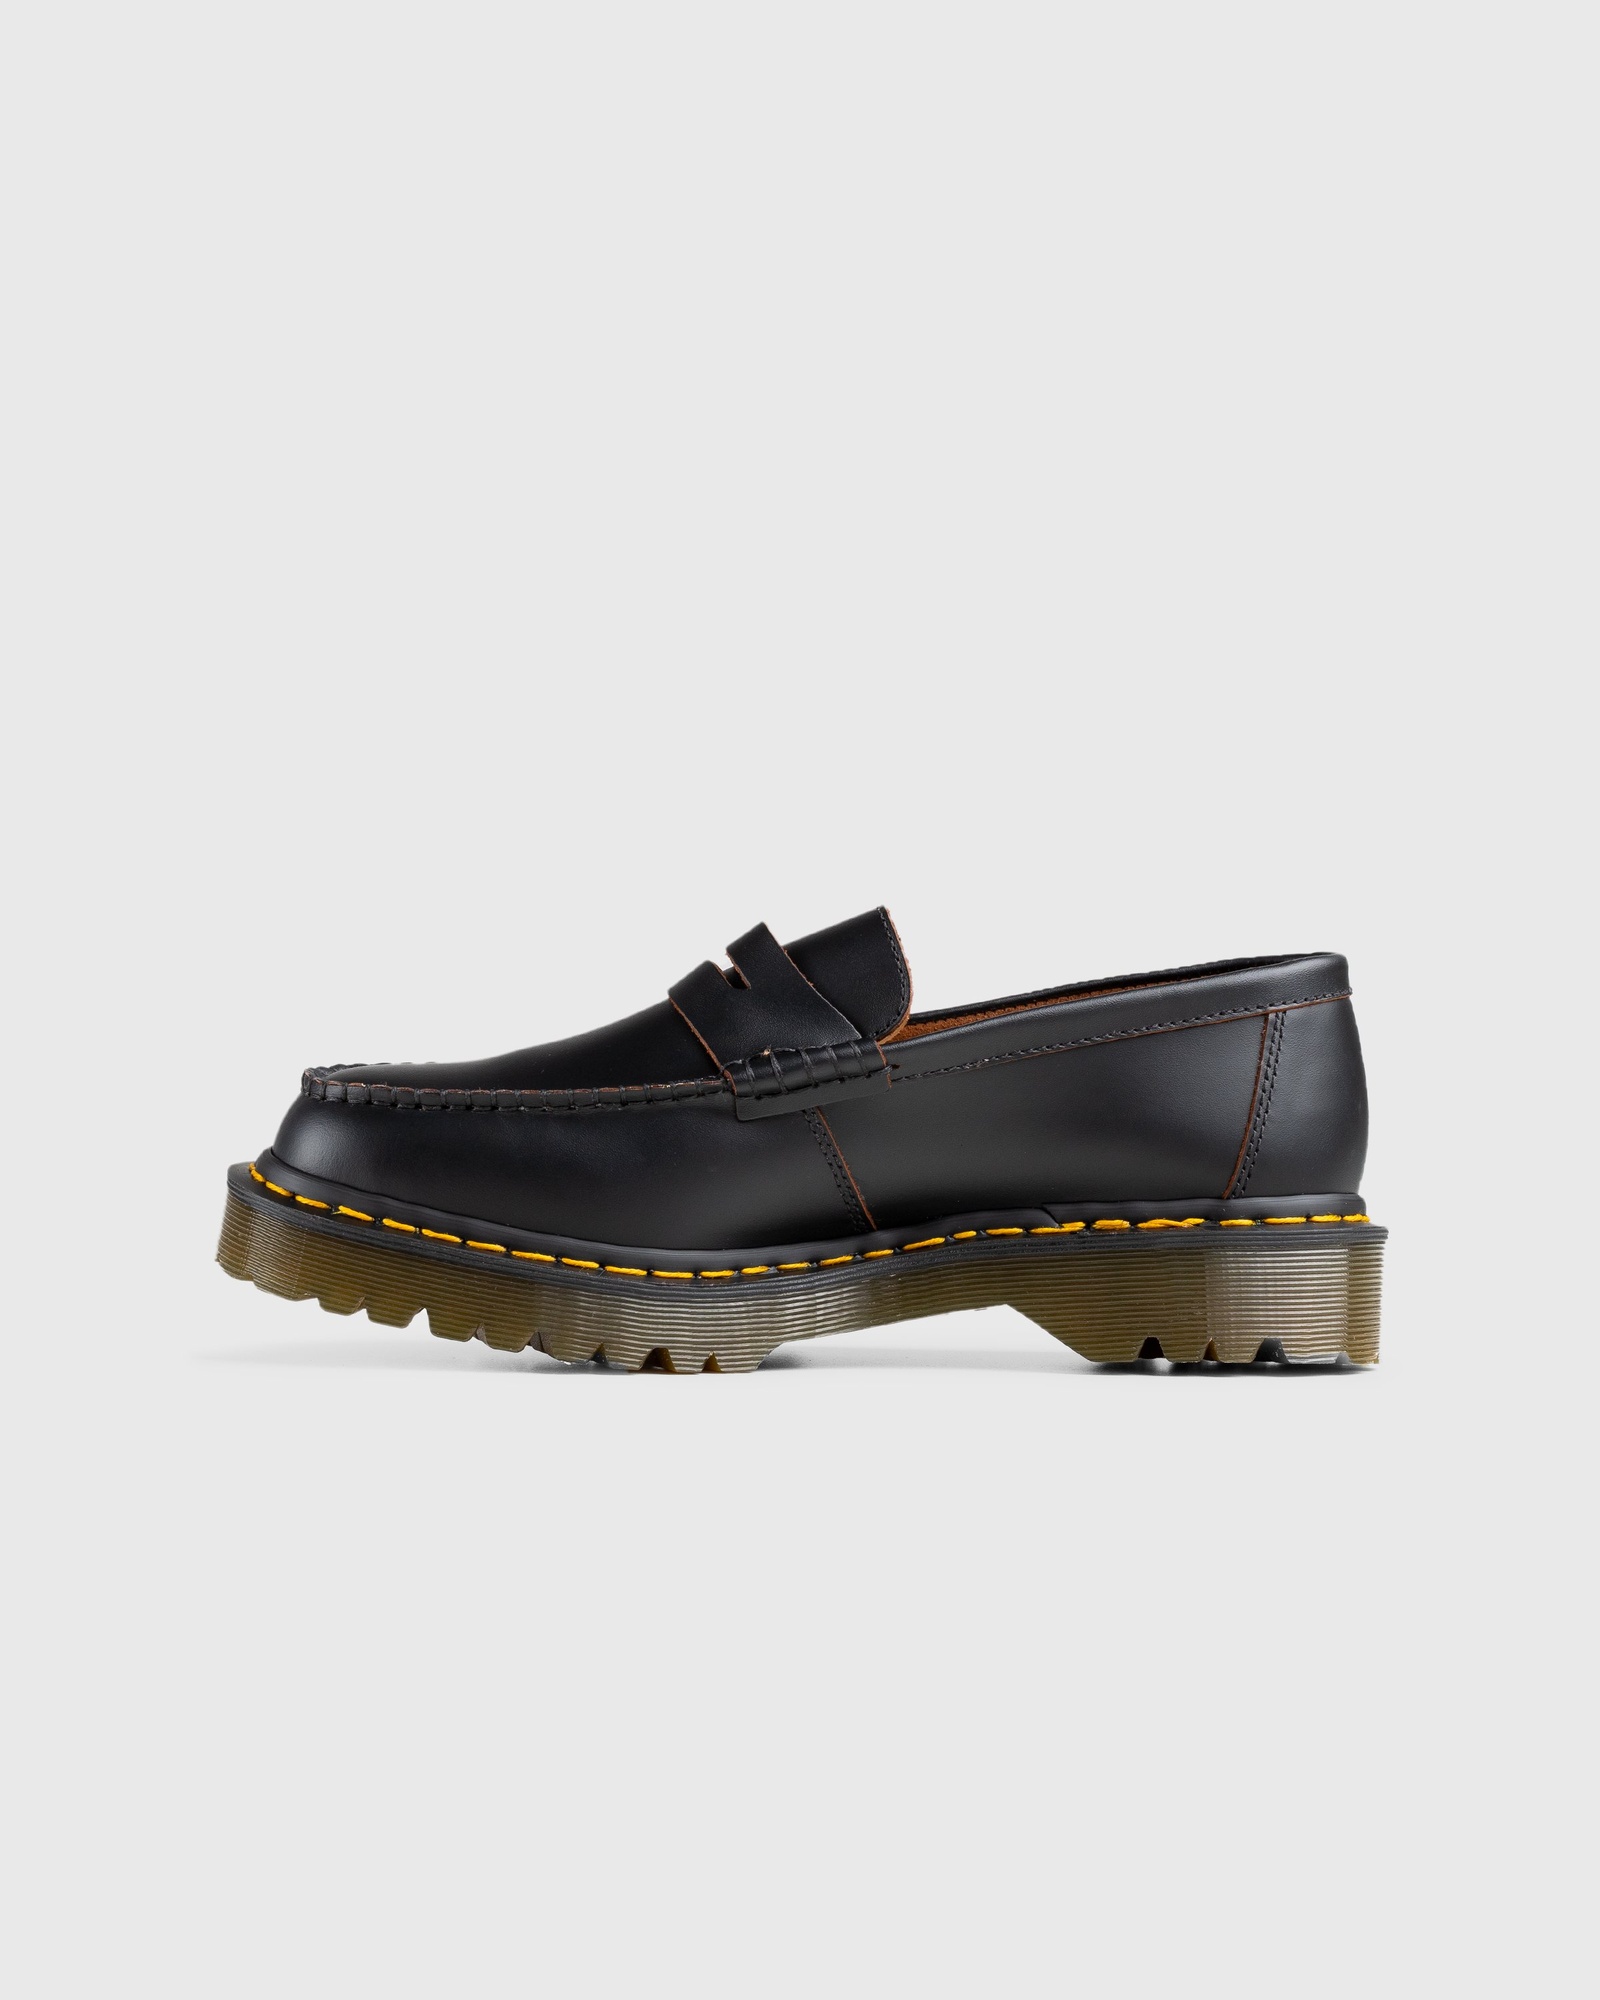 Dr. Martens – Penton Bex Quilon Leather Loafers Black | Highsnobiety Shop